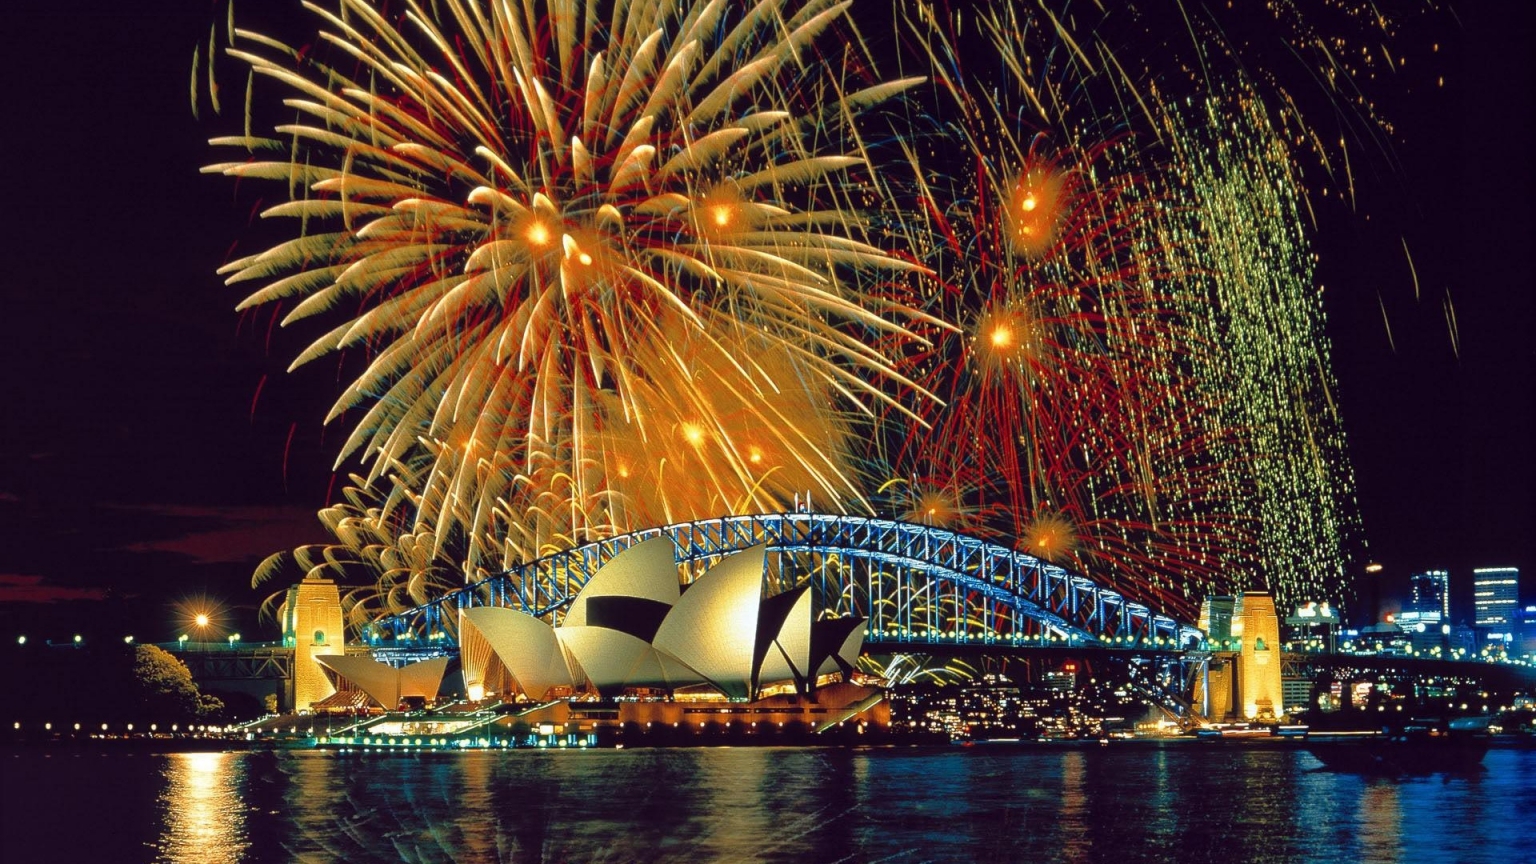 Fireworks Over the Sydney Opera House and Harbor Bridge for 1536 x 864 HDTV resolution